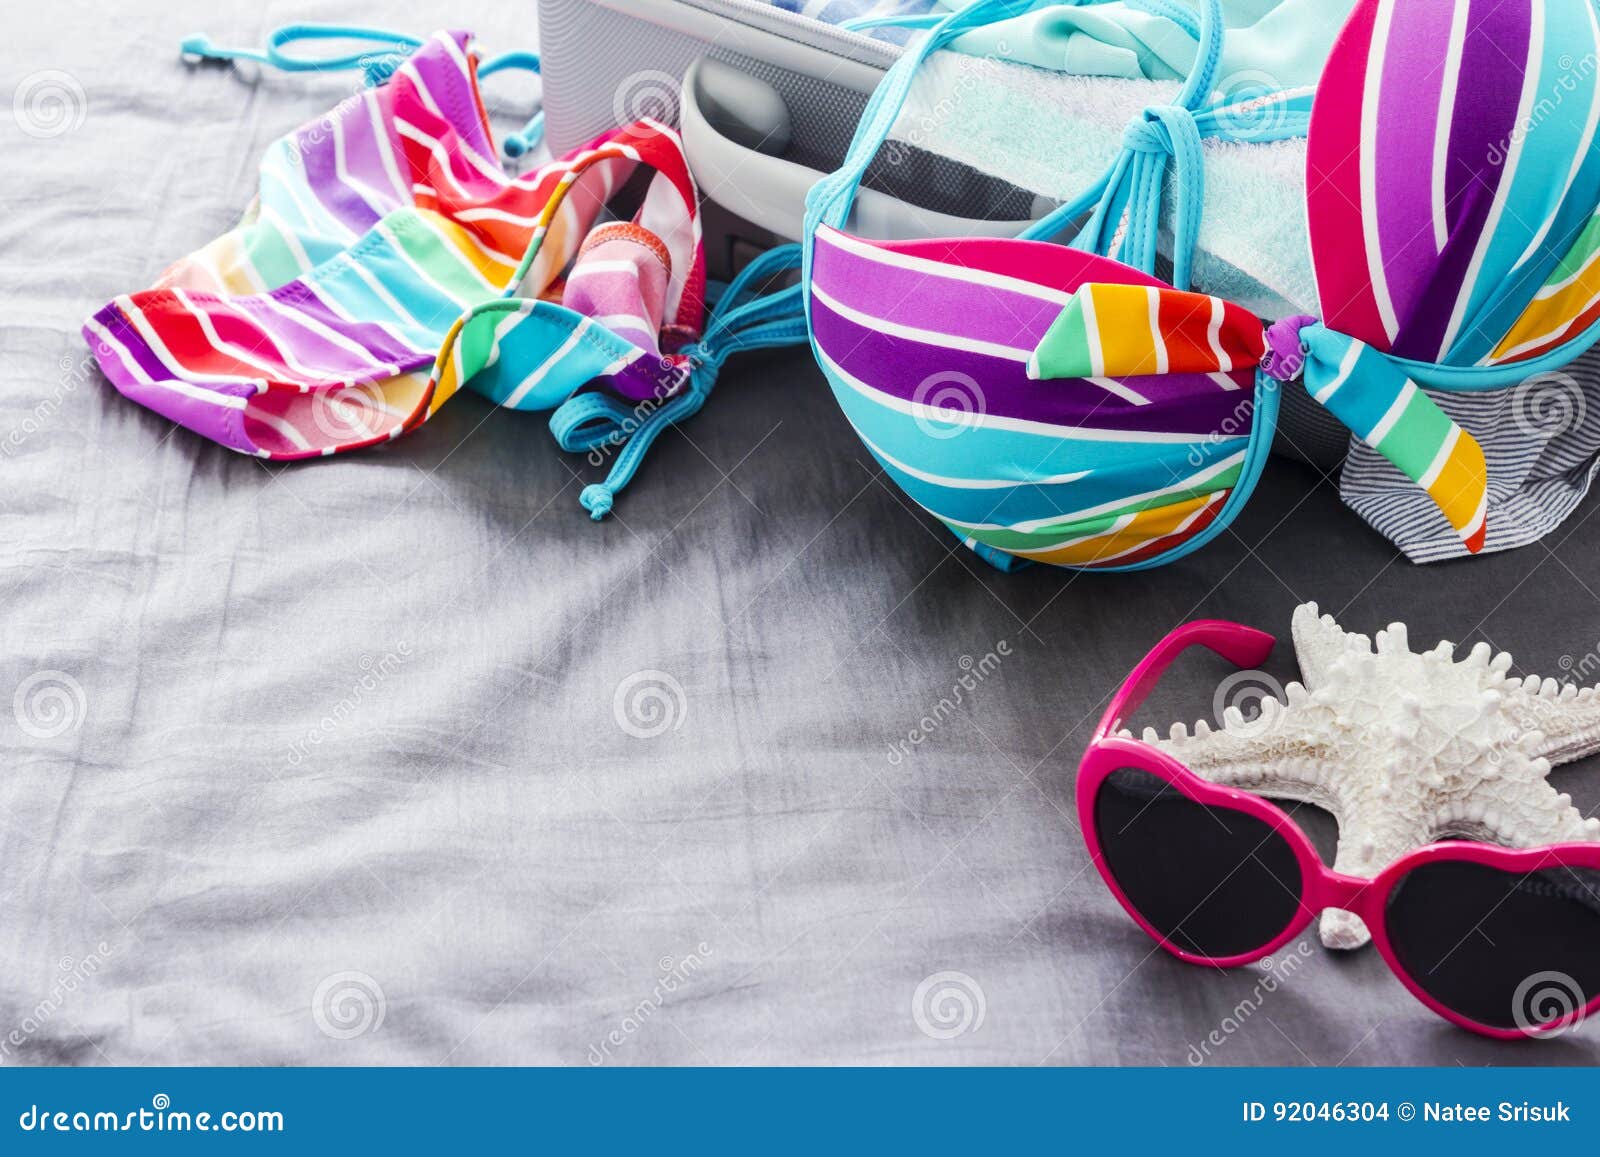 Colorful bikini on the bed stock photo. Image of beach - 92046304